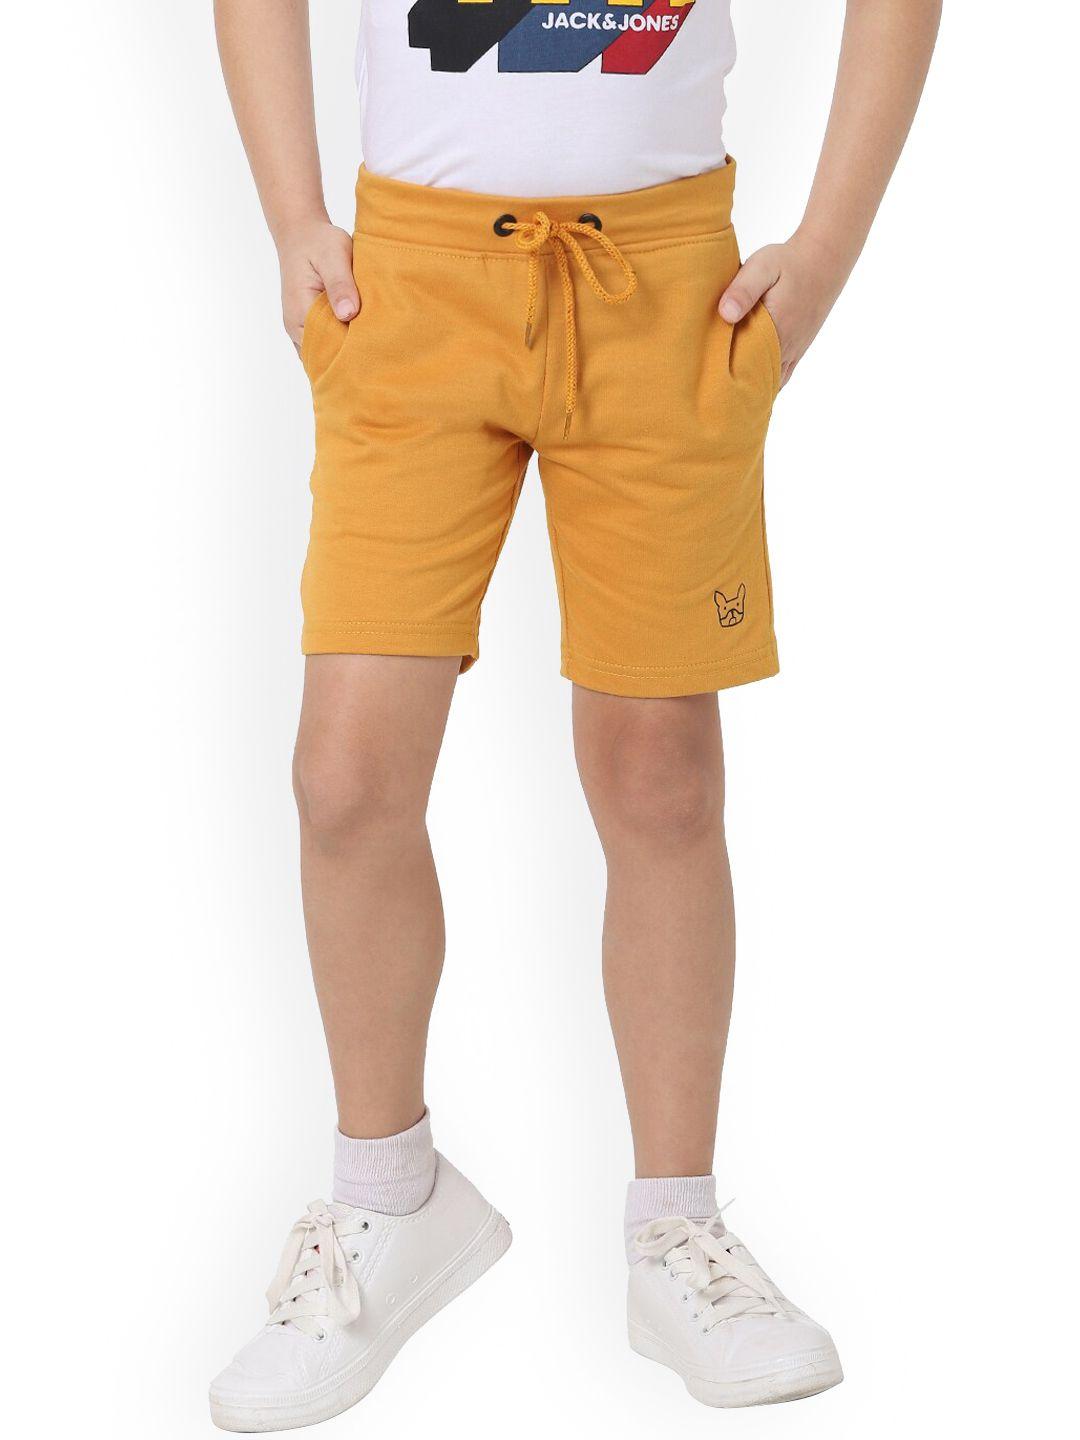 jack & jones boys yellow solid shorts